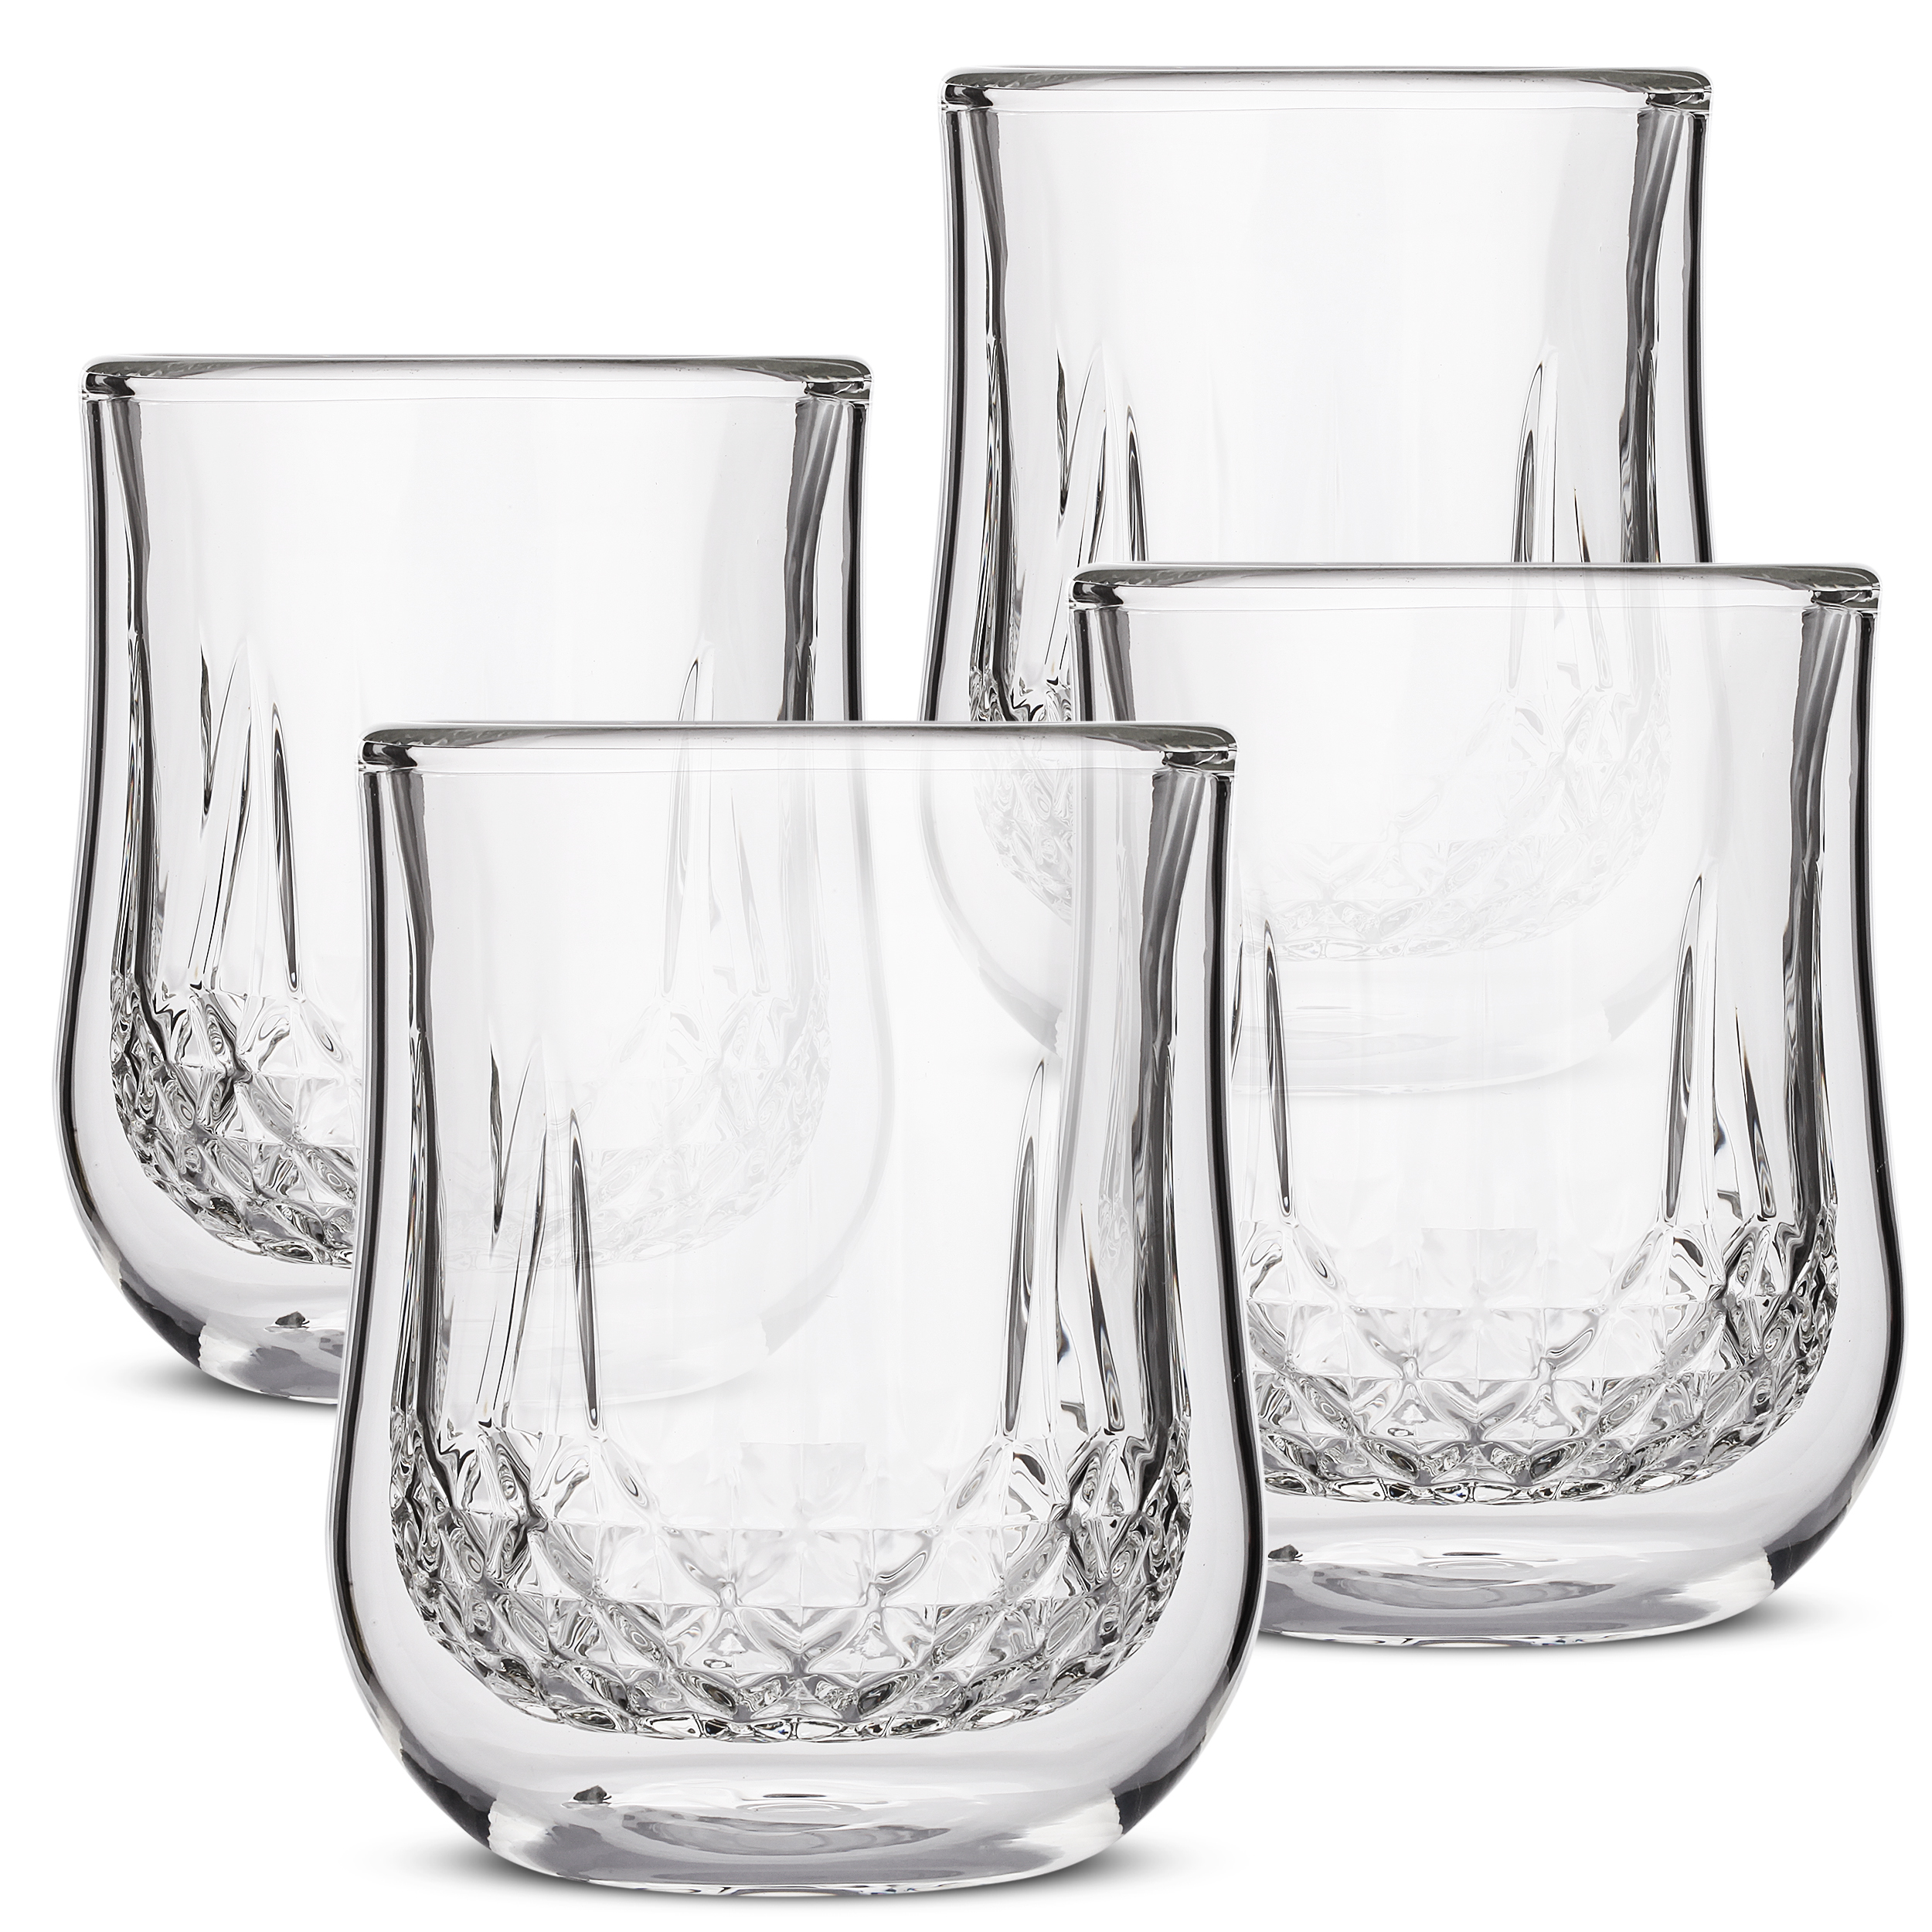 BTaT- Whiskey Glasses Double Wall, Bourbon Glasses, Set of 4, Cocktail  Glasses, Scotch Glasses, Old …See more BTaT- Whiskey Glasses Double Wall